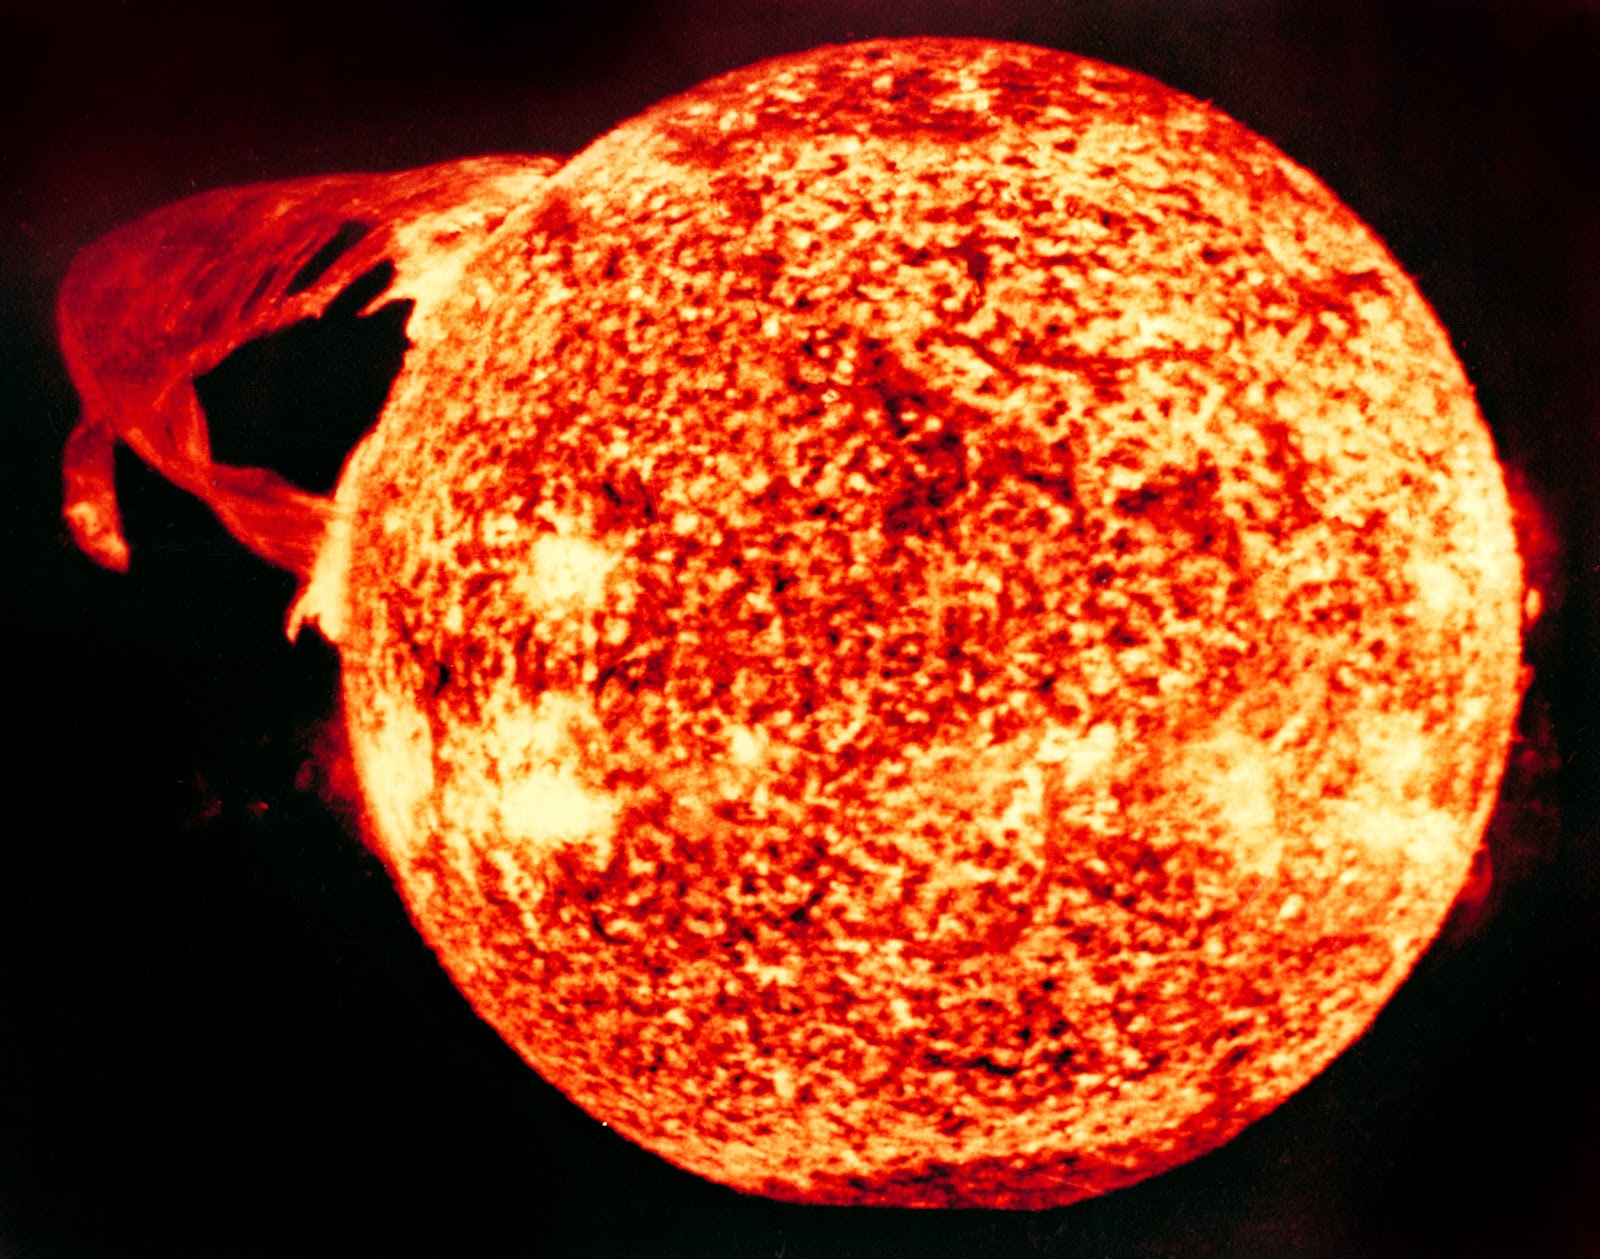 https://upload.wikimedia.org/wikipedia/commons/3/37/Skylab_Solar_flare.jpg